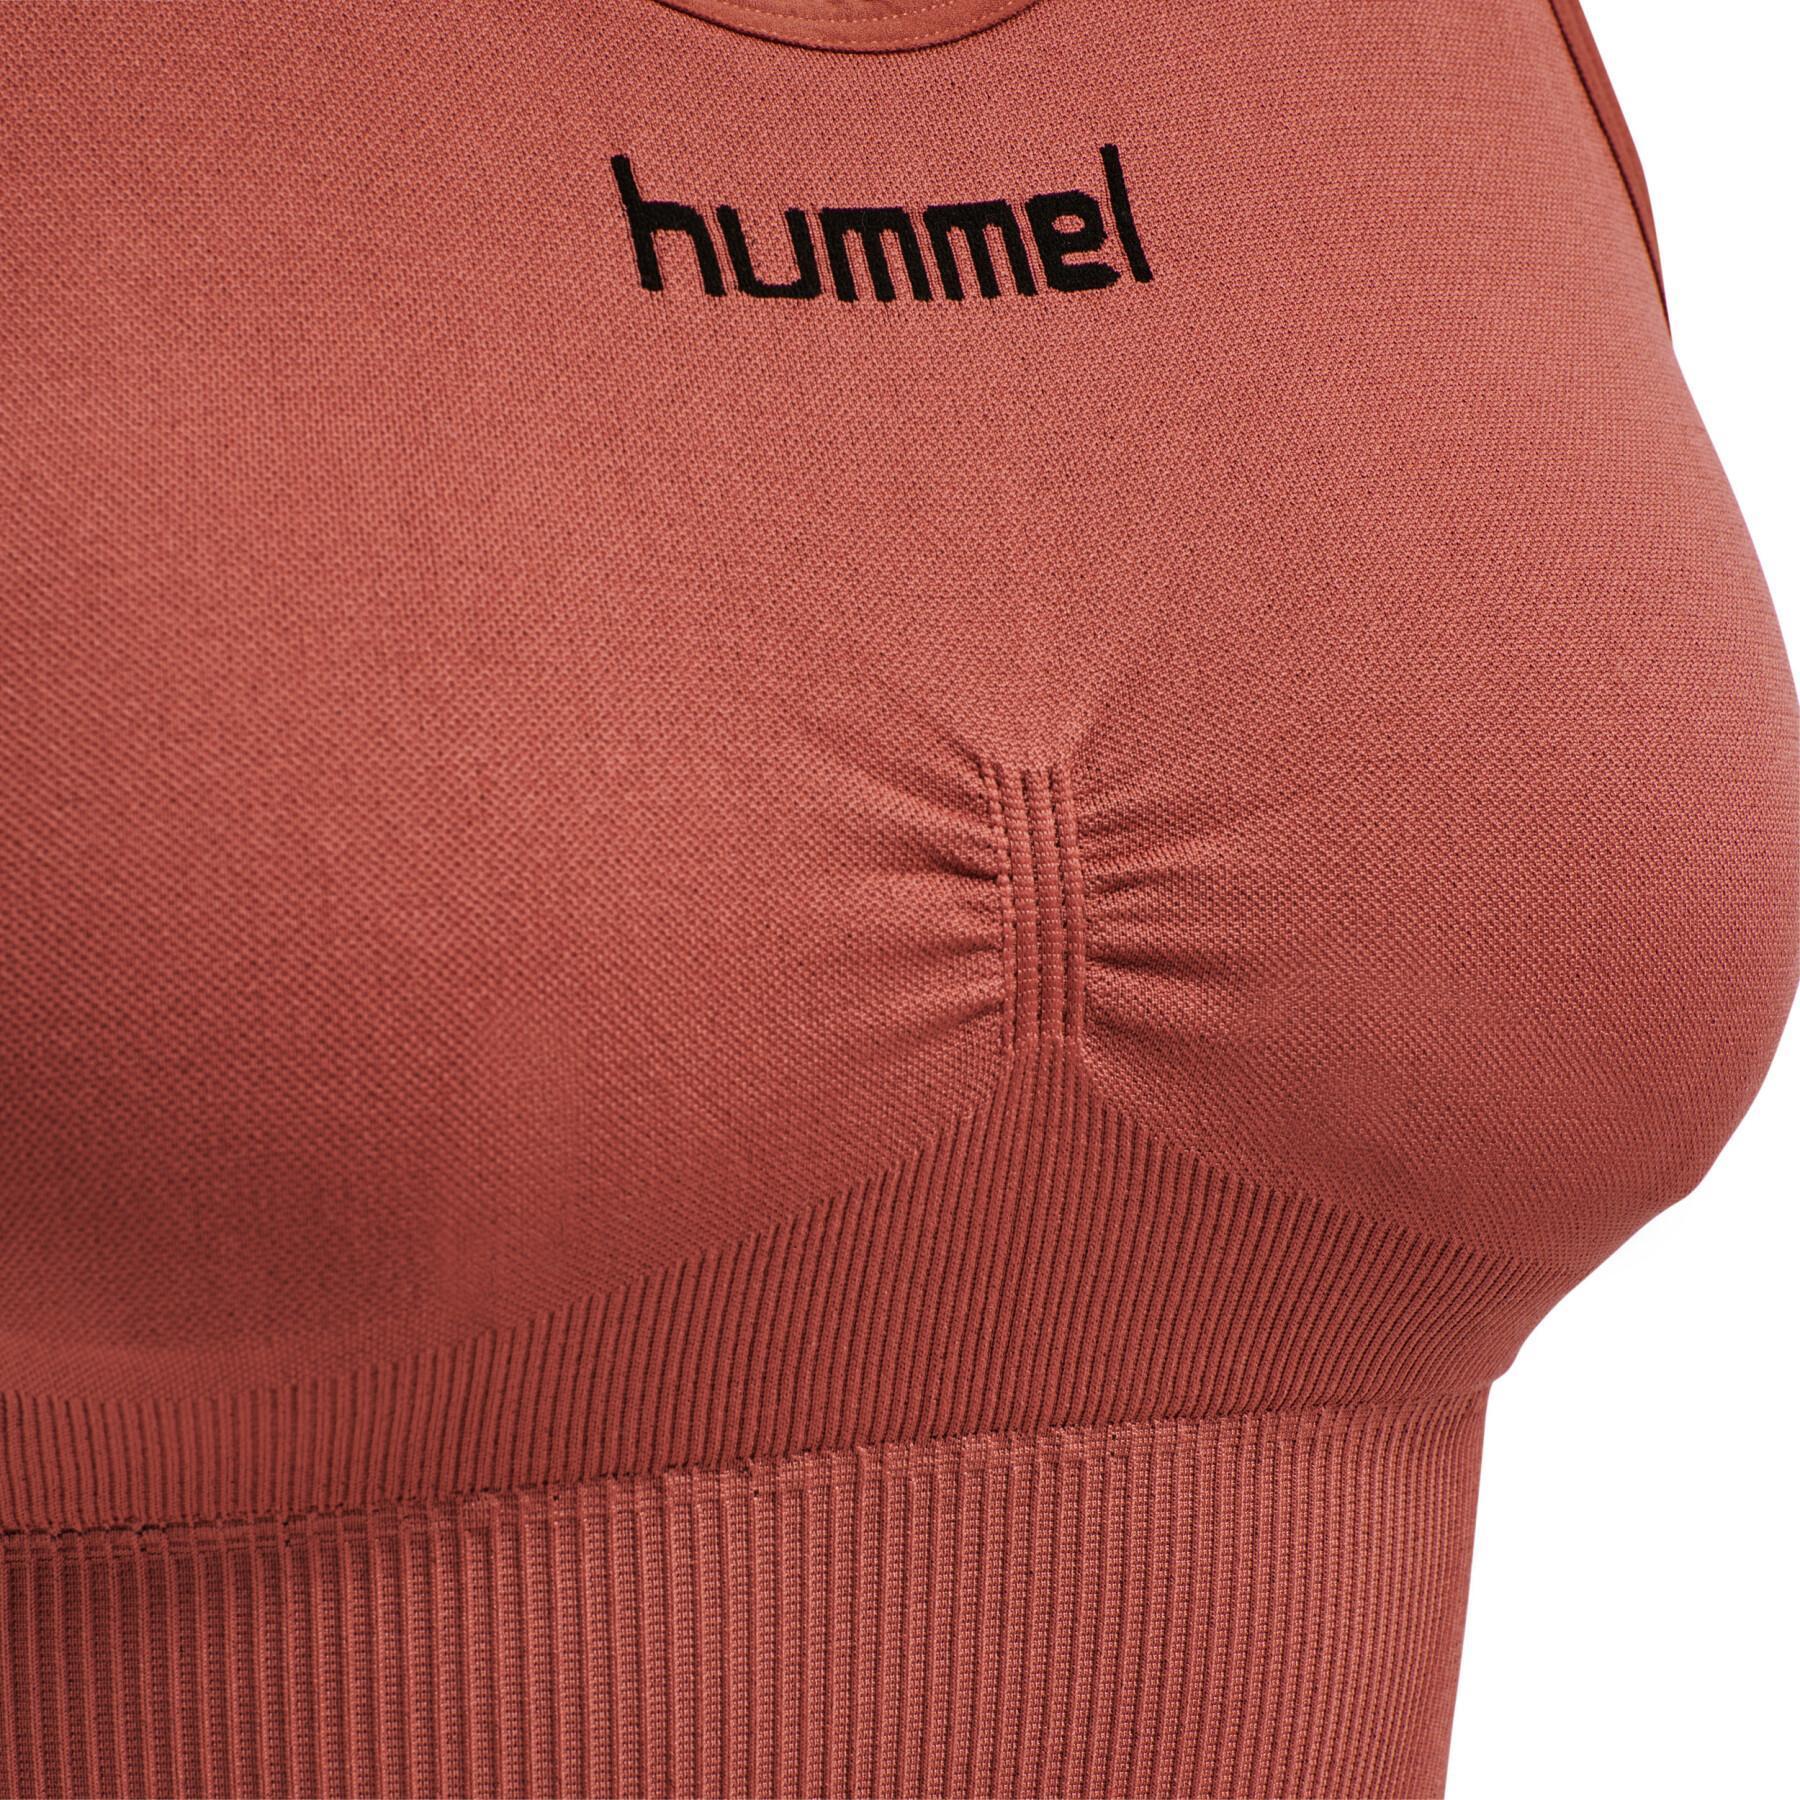 Soutien sem costura para mulheres Hummel First